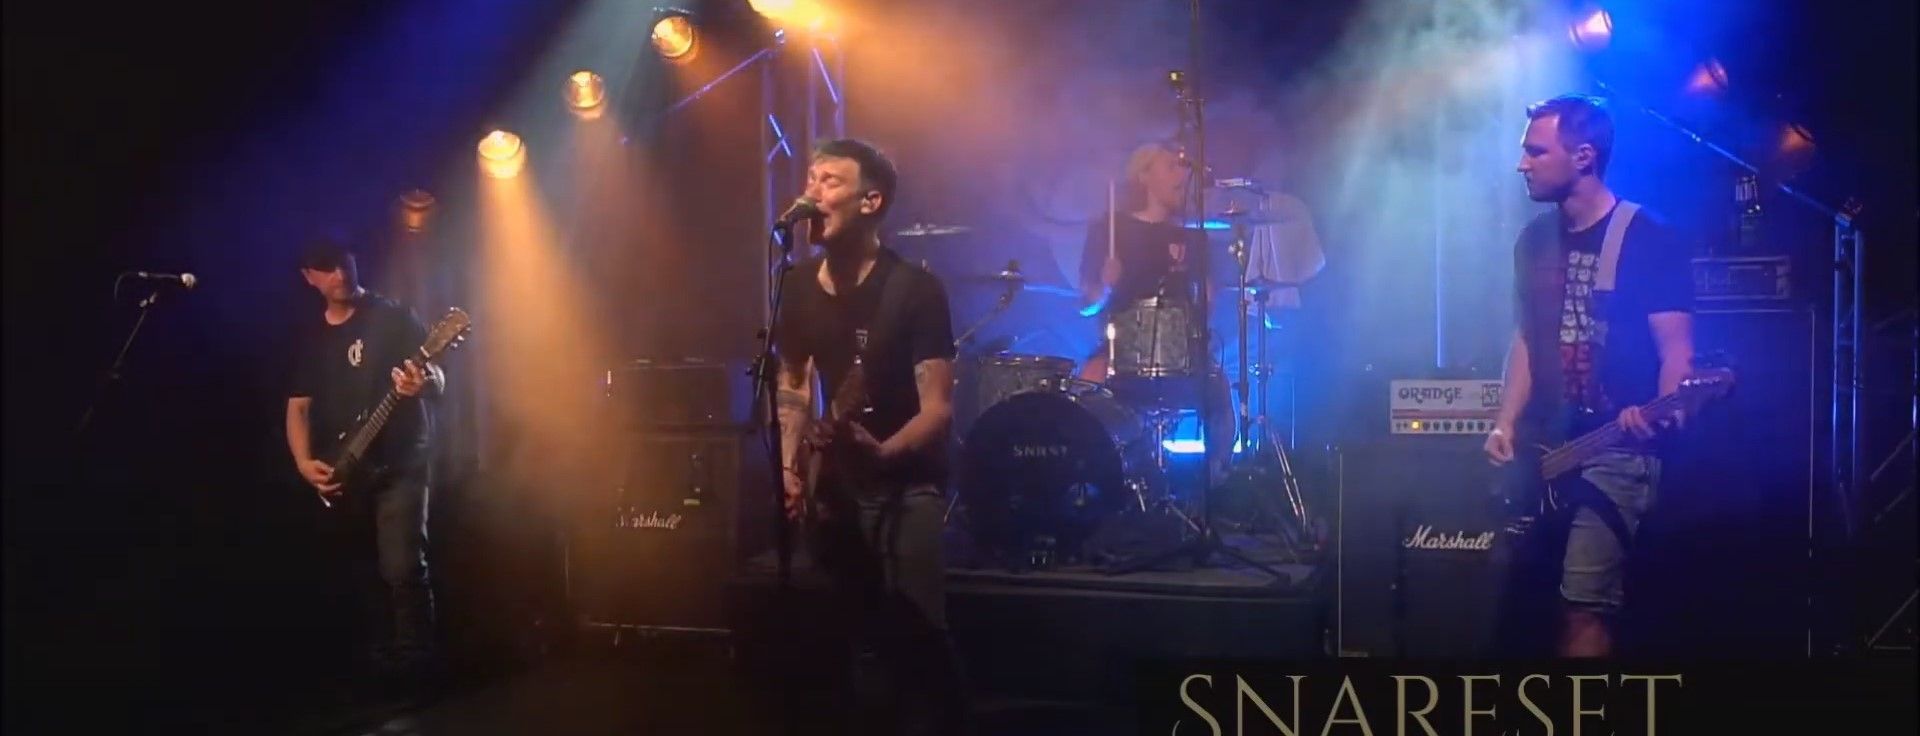 Snareset - Happy (Live At Münster 2020)